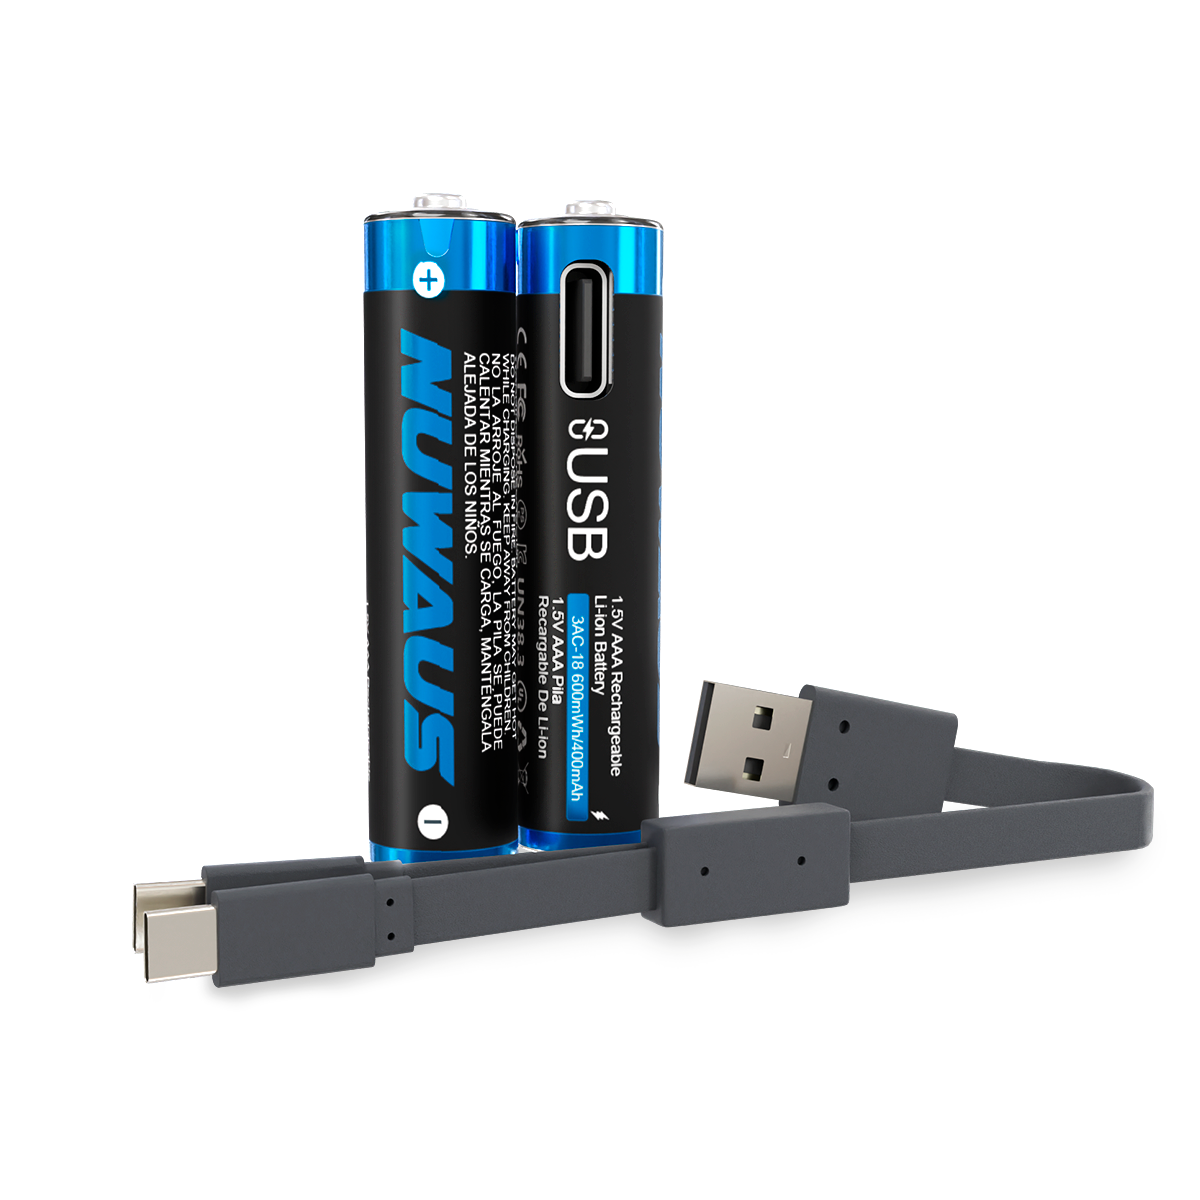 Pilas recargables Nuwaus AAA x2 unidades entrada USB-C